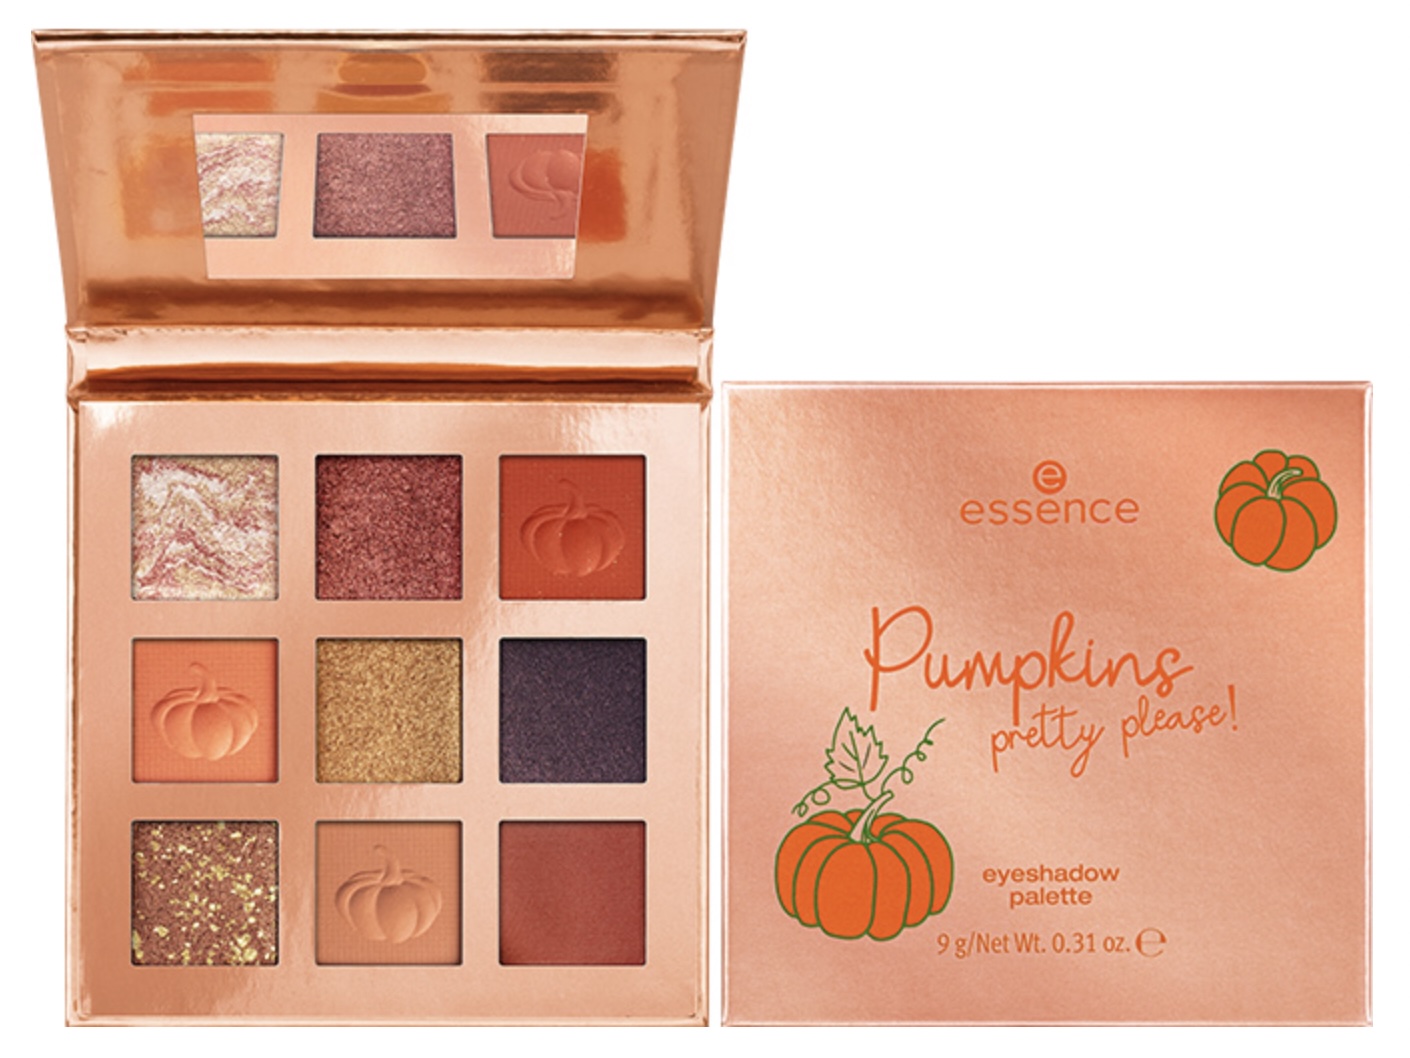 Collection automne 2022 de Essence Pumpkins pretty please! eyeshadow palette